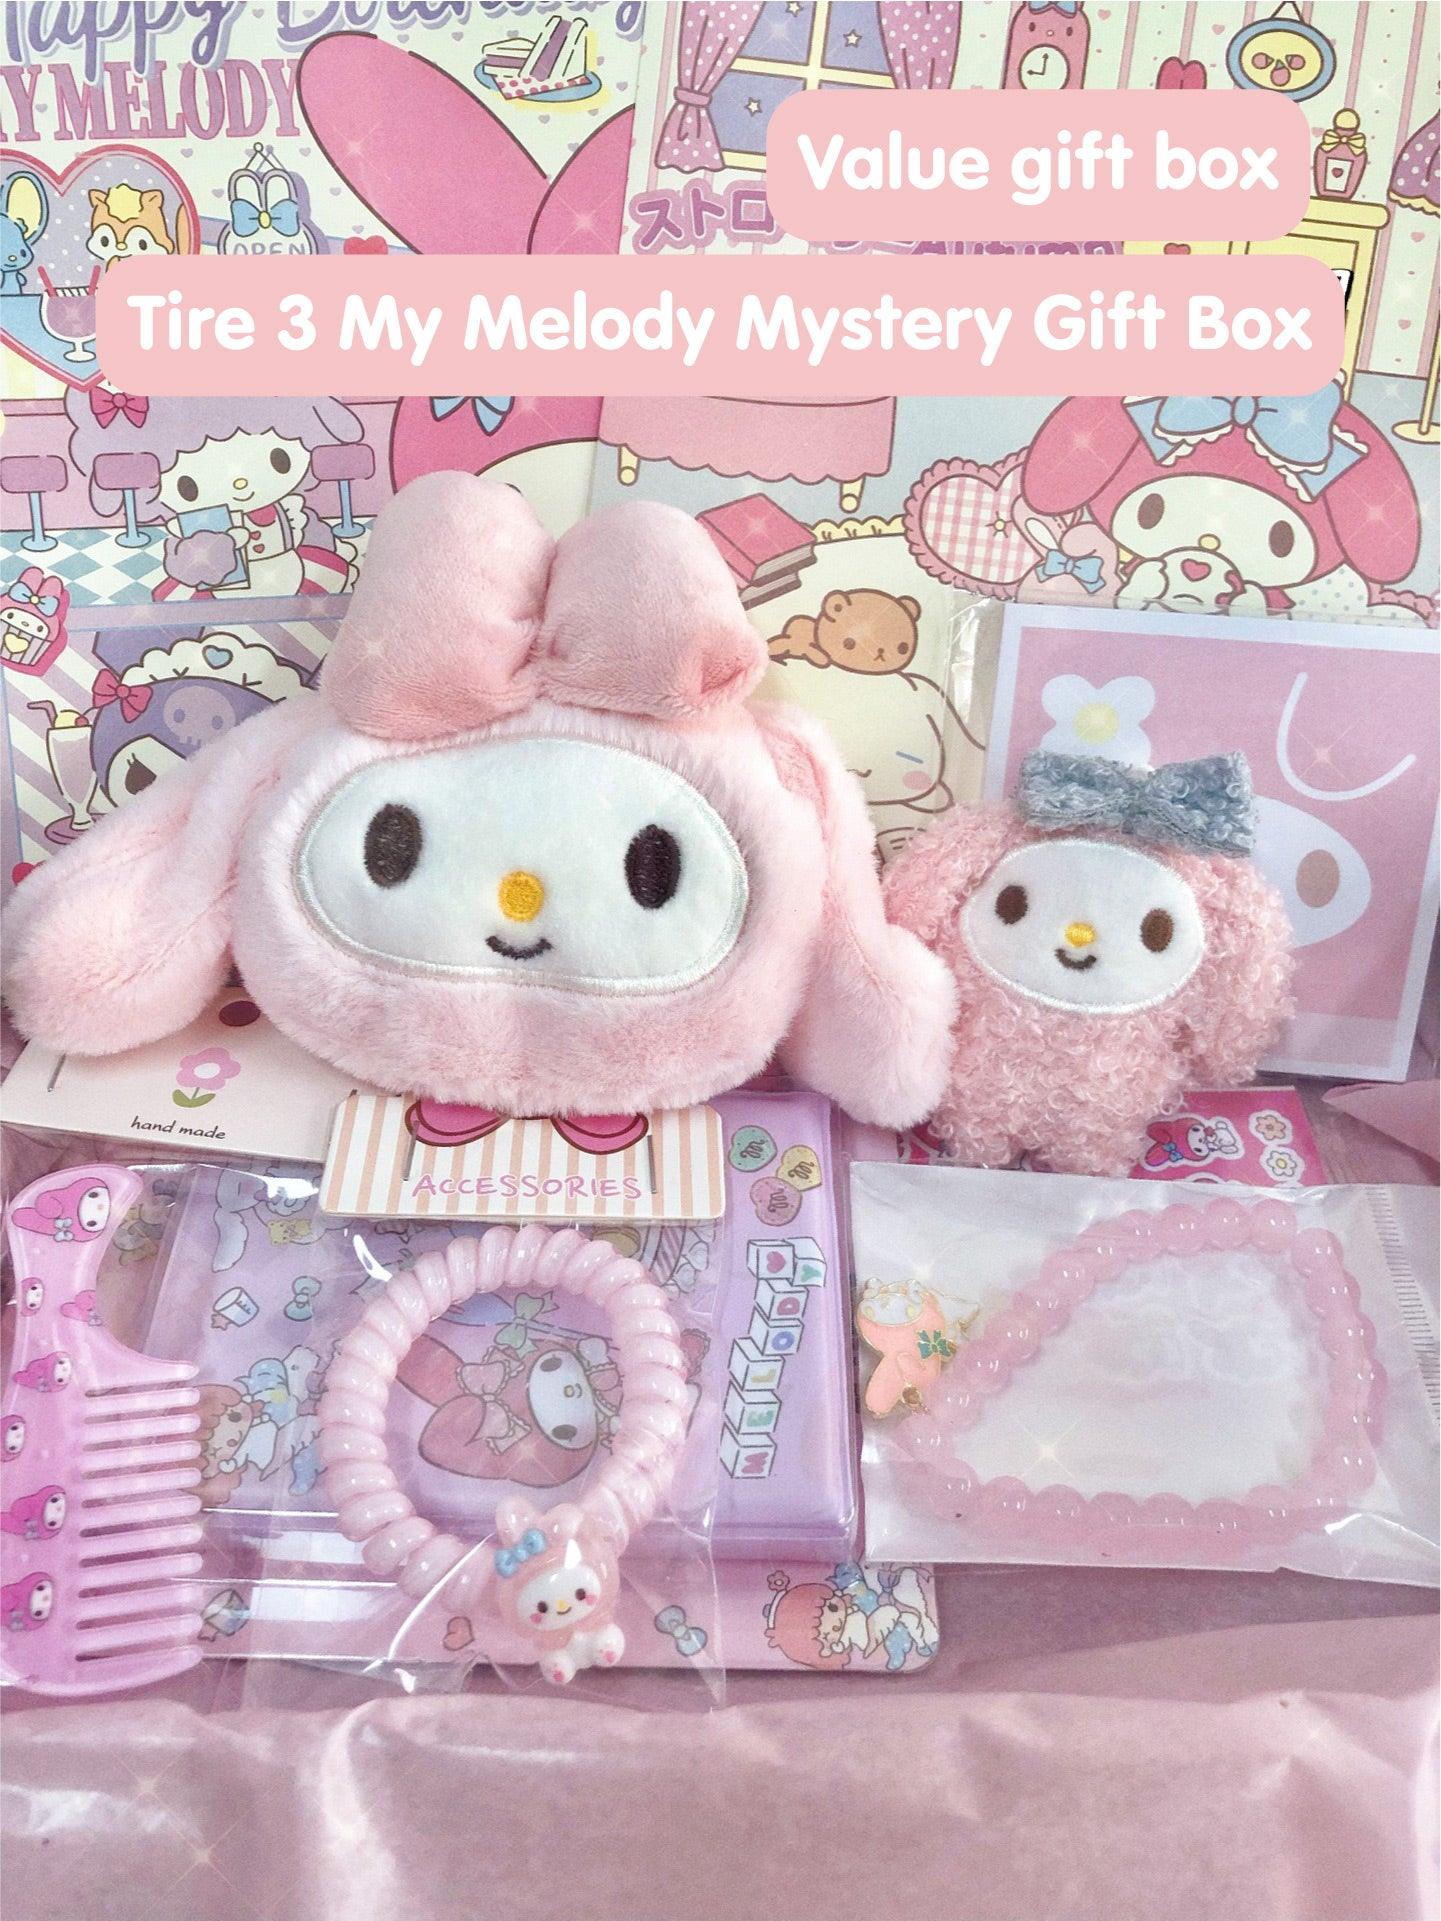 Pochacco Mystery Gift Box – In Kawaii Shop